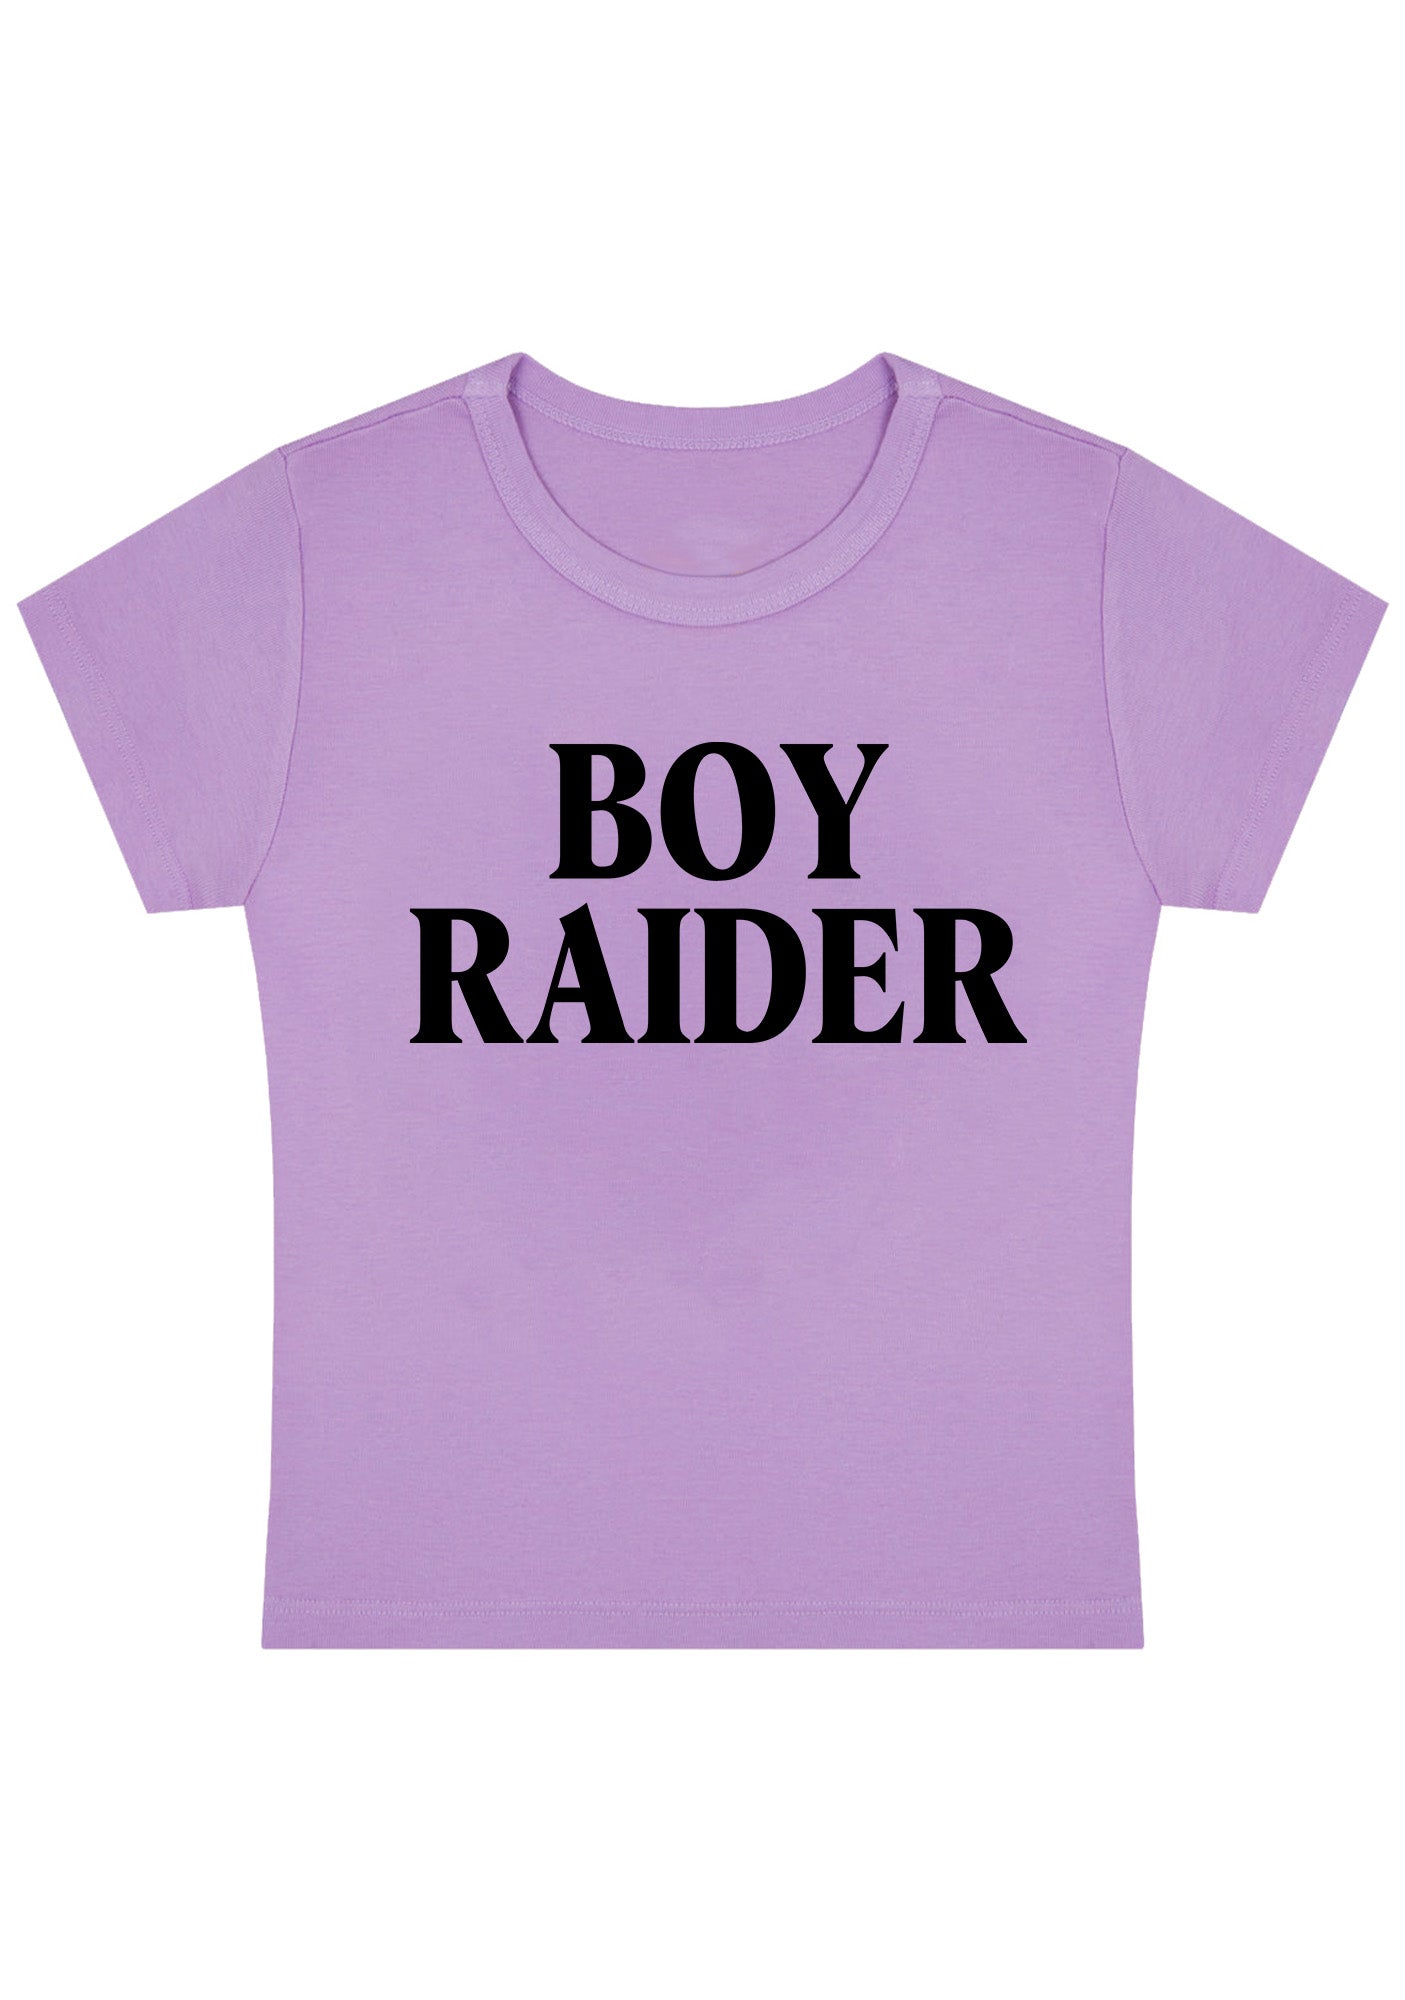 Curvy Boy Raider Baby Tee